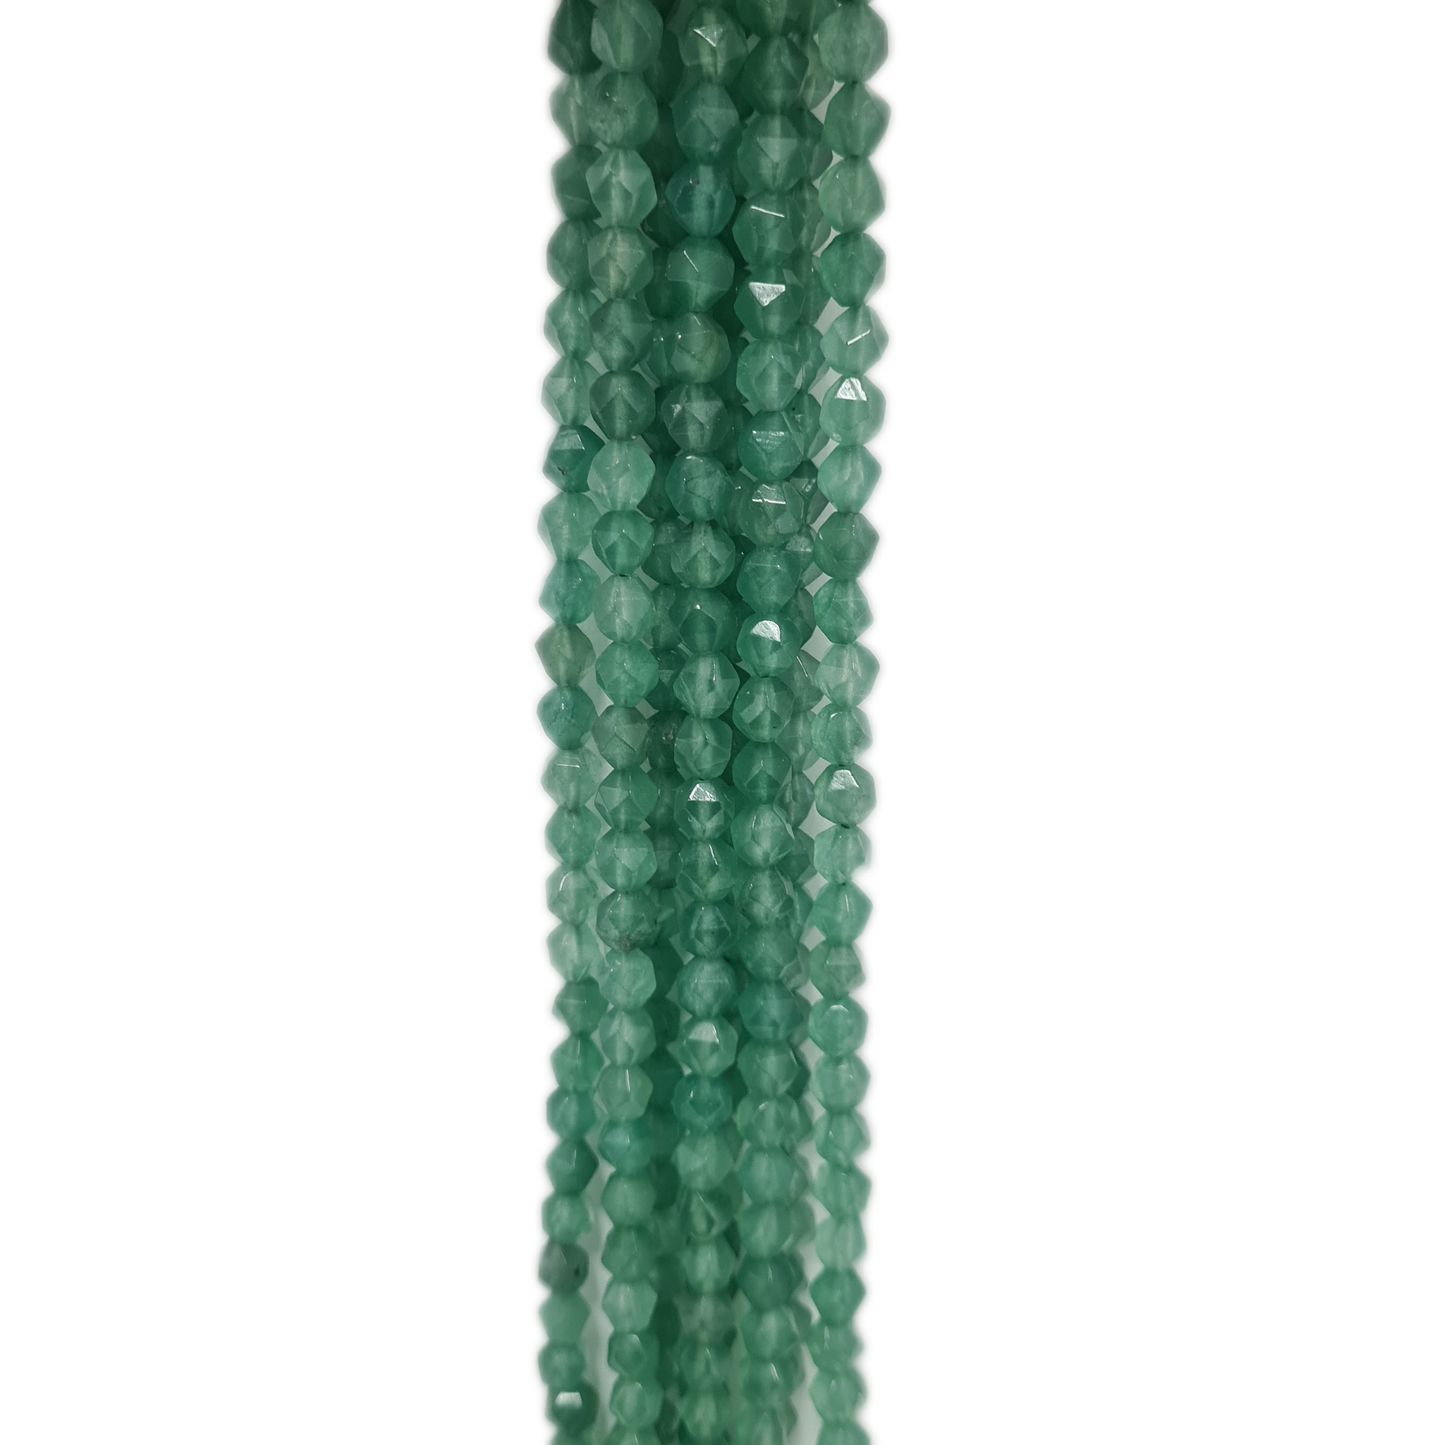 Strand of 8mm Dyed Quartz Beads